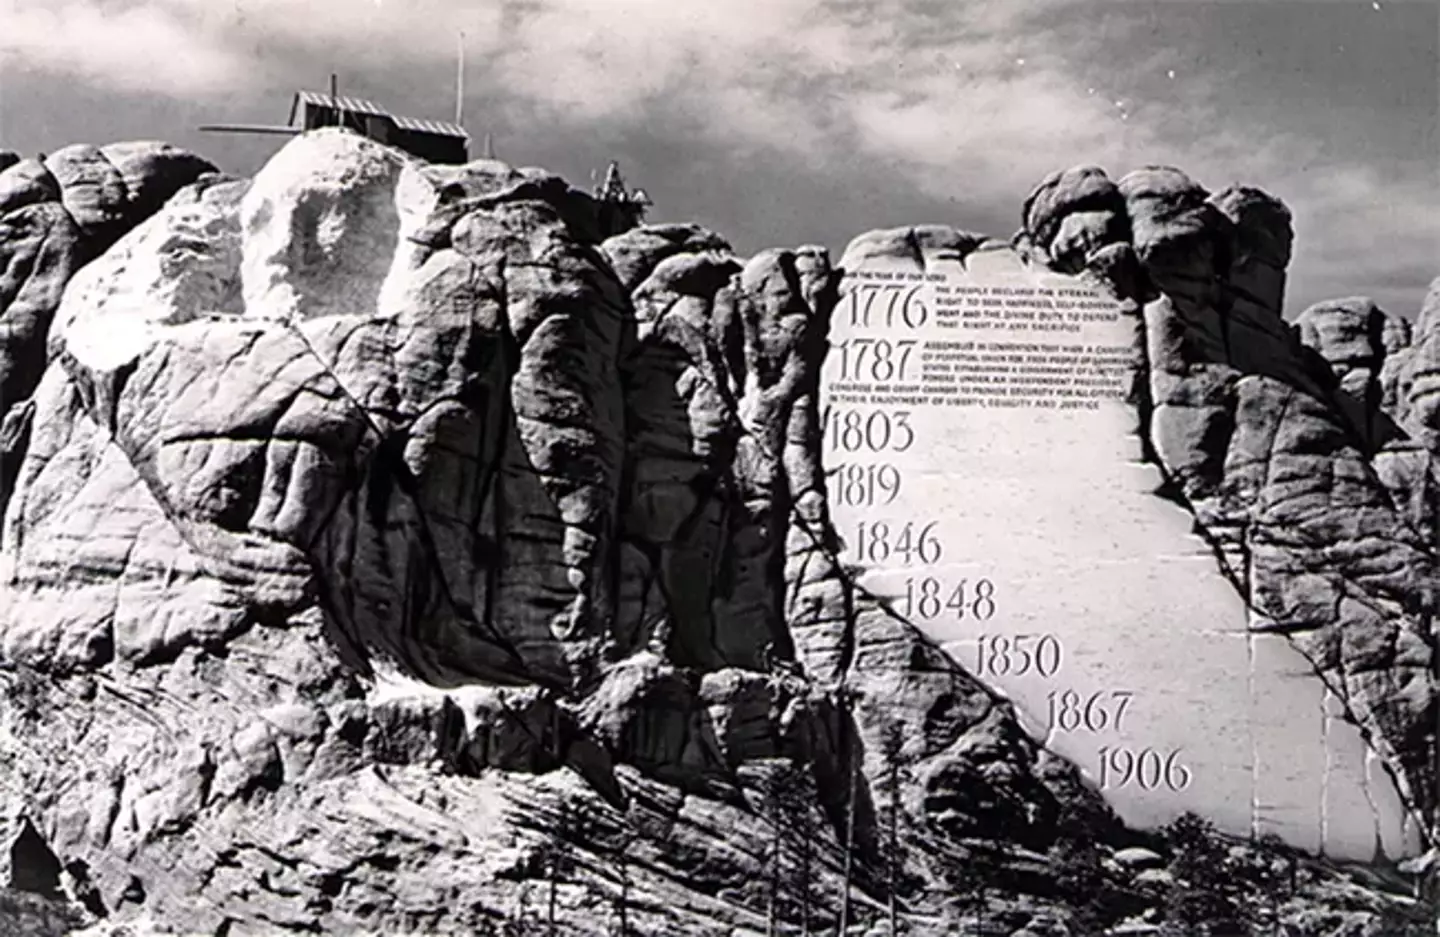 The original design featured script. (National Park Service) 